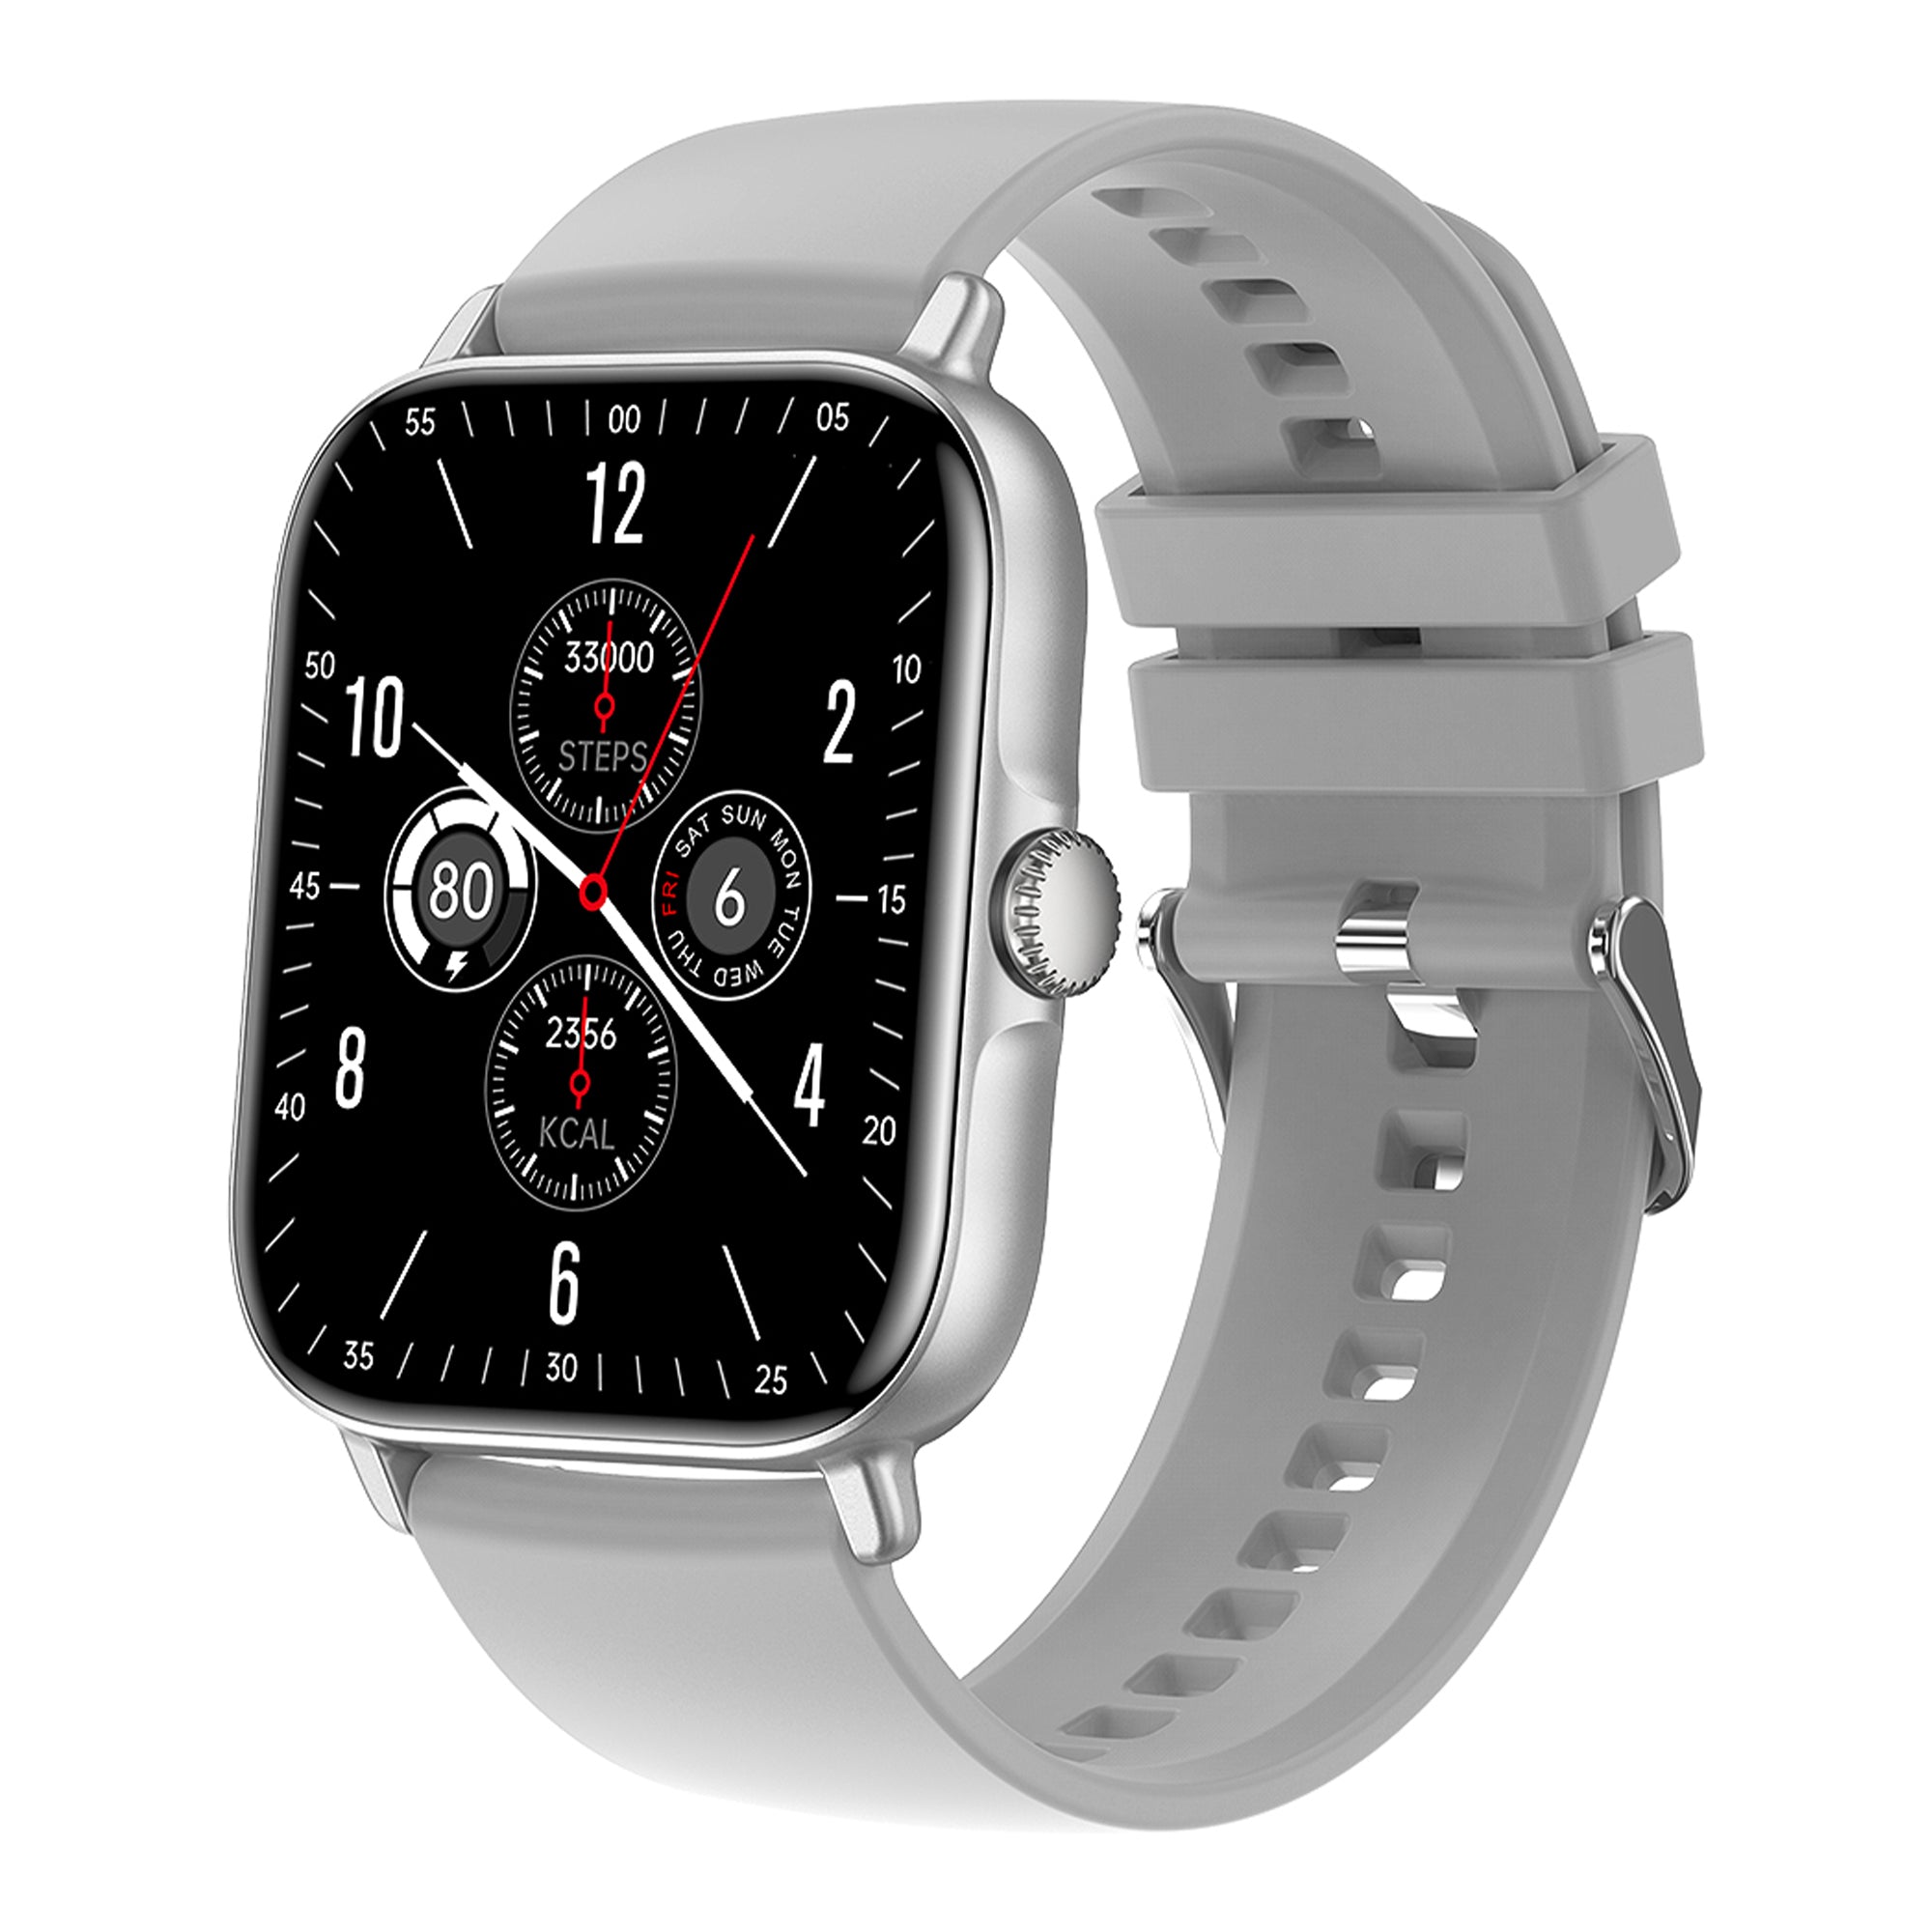 GIZMORE FLASH BT Calling Smartwatch | 1.85 Inch Big Display| 500 NITS | SpO2 Smartwatch Voice Assistance, Bluetooth Smartwatch